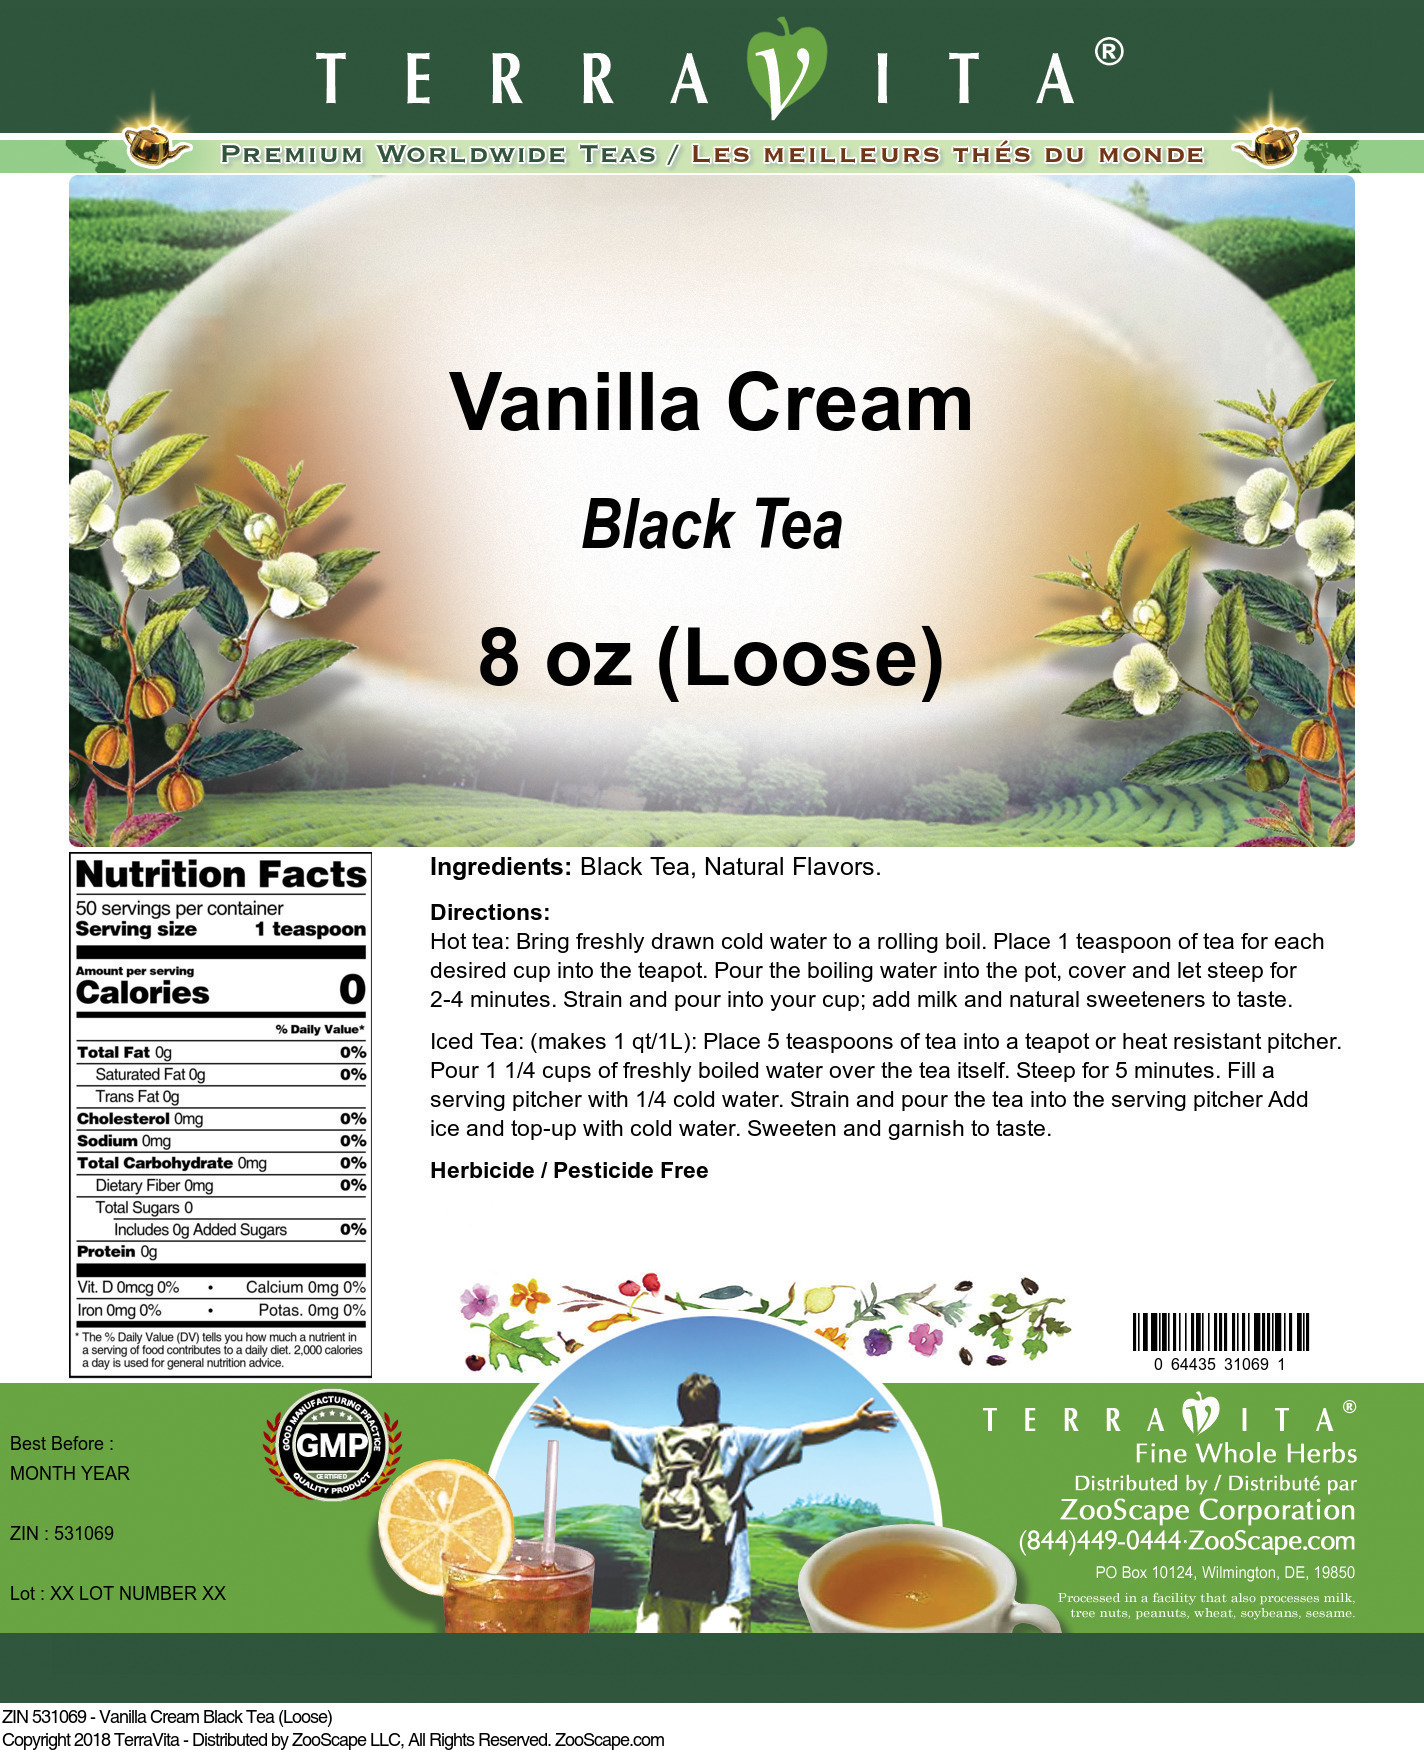 Vanilla Cream Black Tea (Loose) - Label